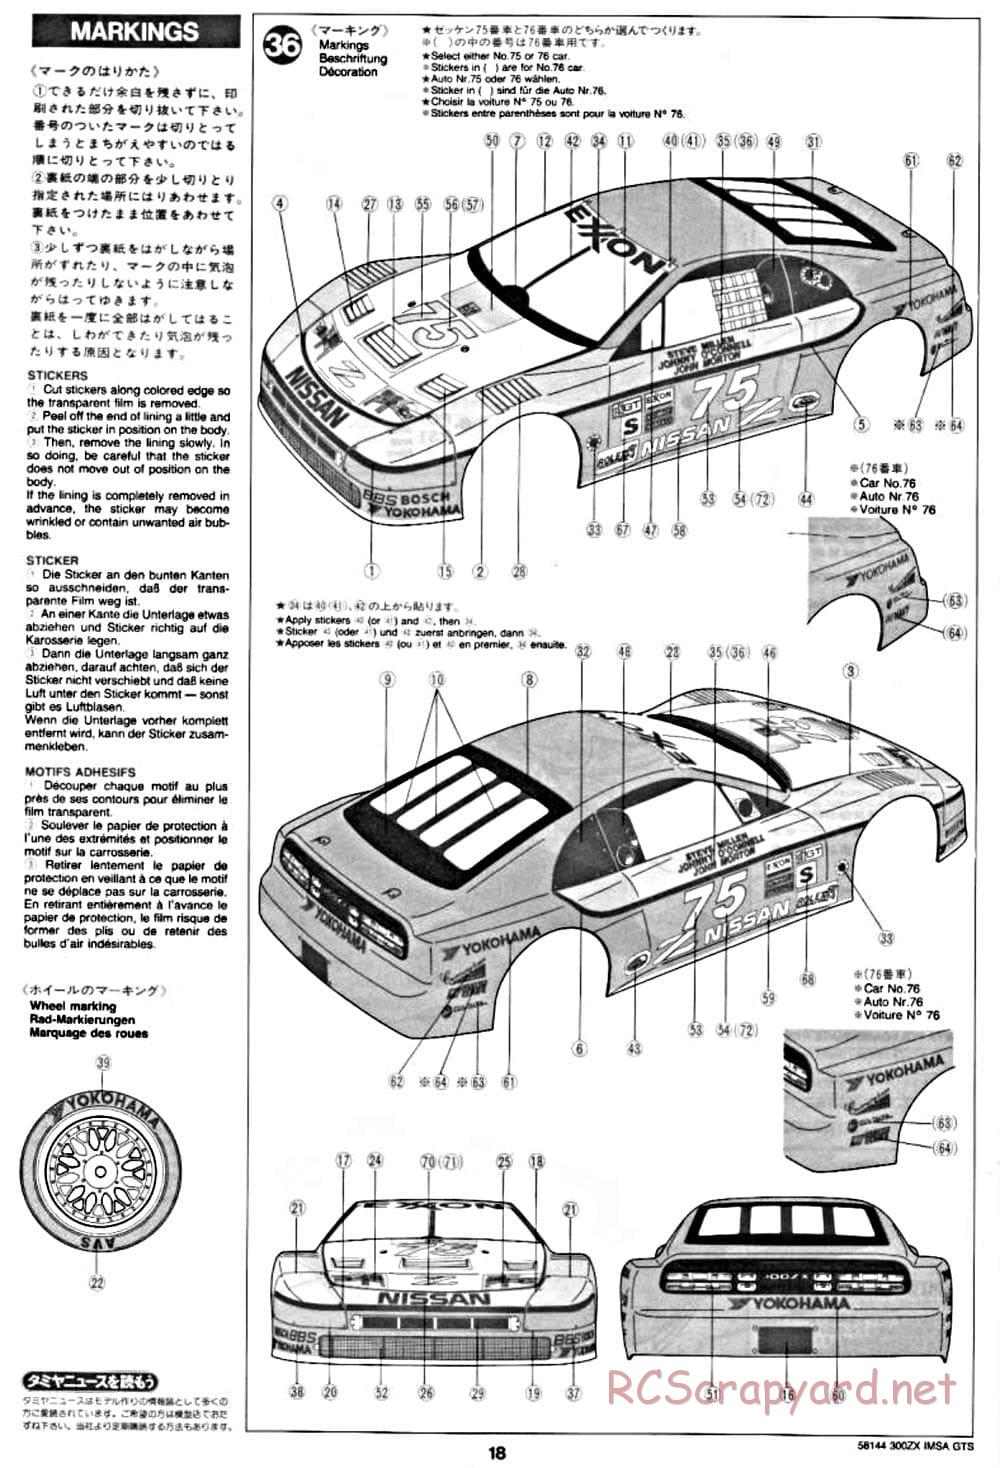 Tamiya - Nissan 300ZX IMSA-GTS - TA-02W Chassis - Manual - Page 18